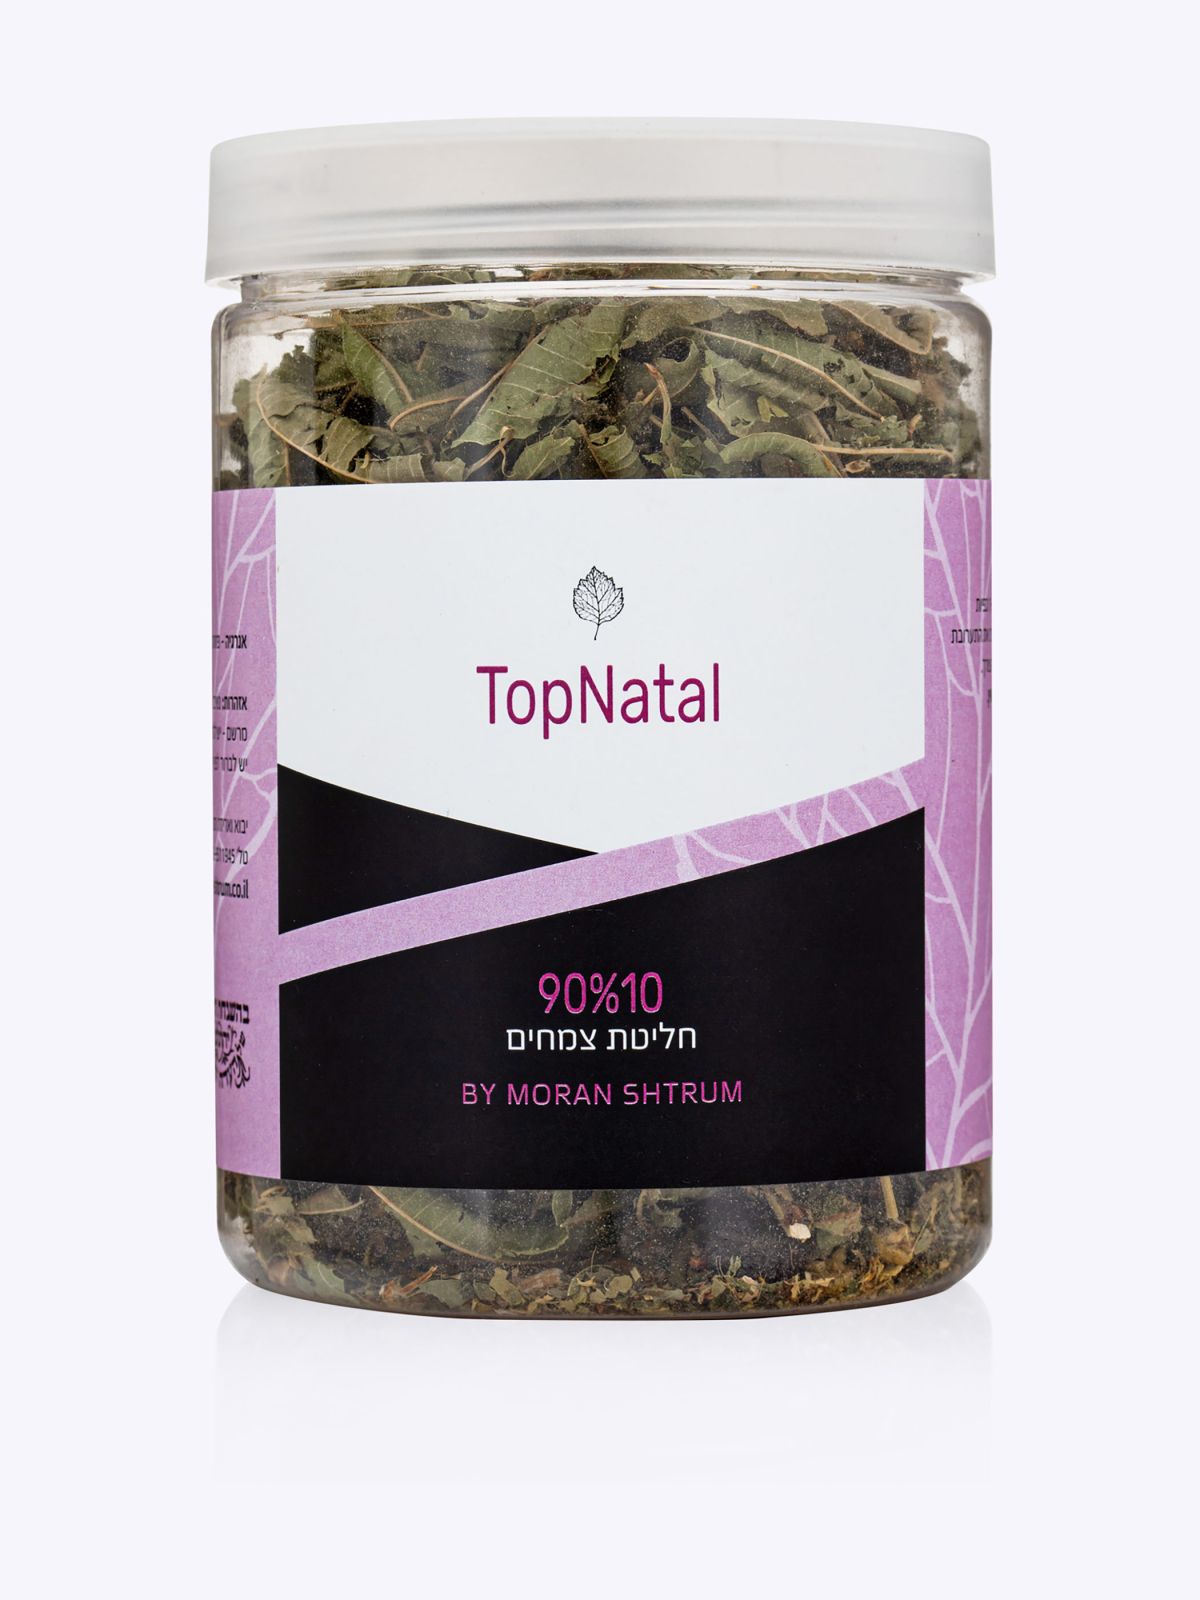  TopNatal פורמולת צמחים לנשים בשליש השלישי להריון של MORAN SHTRUM